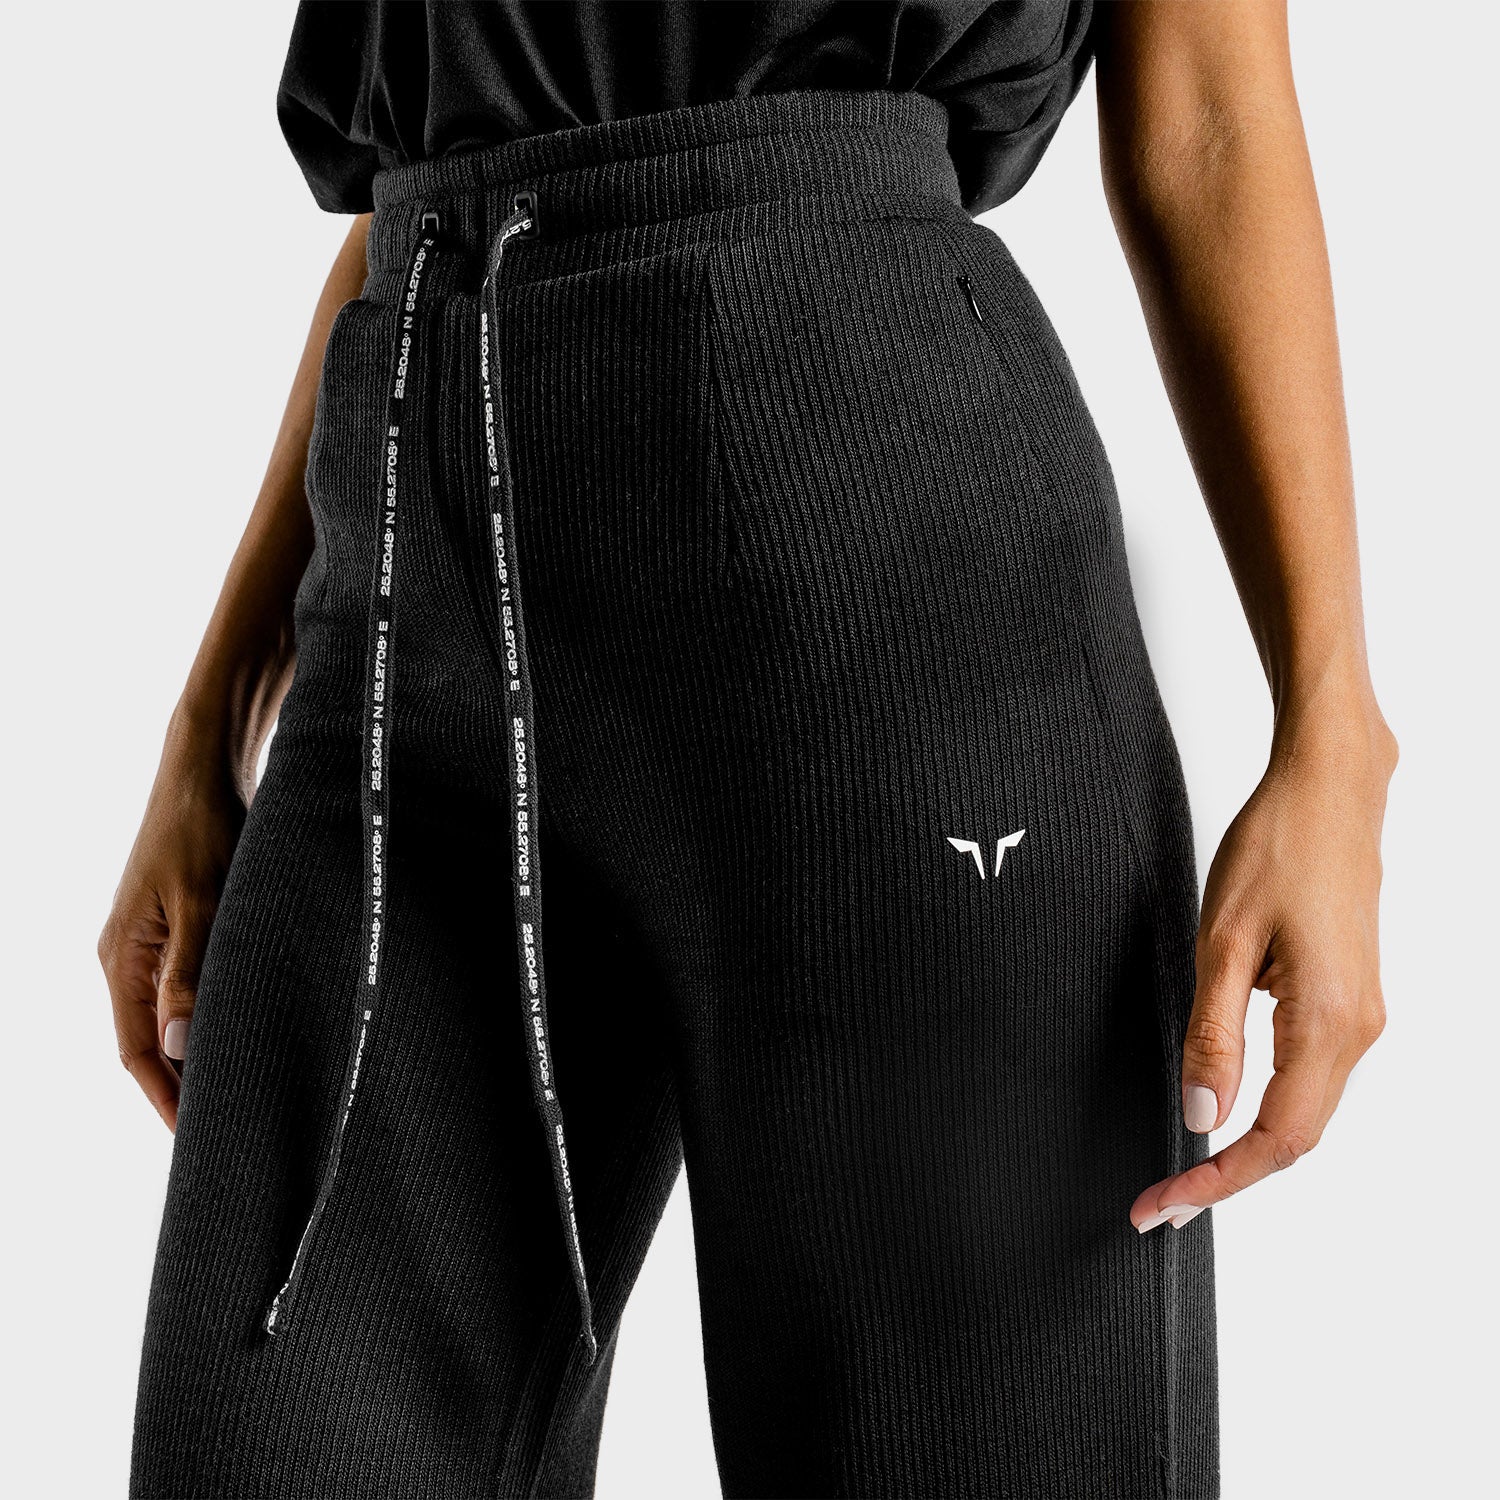 squatwolf-gym-pants-for-women-luxe-wide-leg-pants-black-workout-clothes